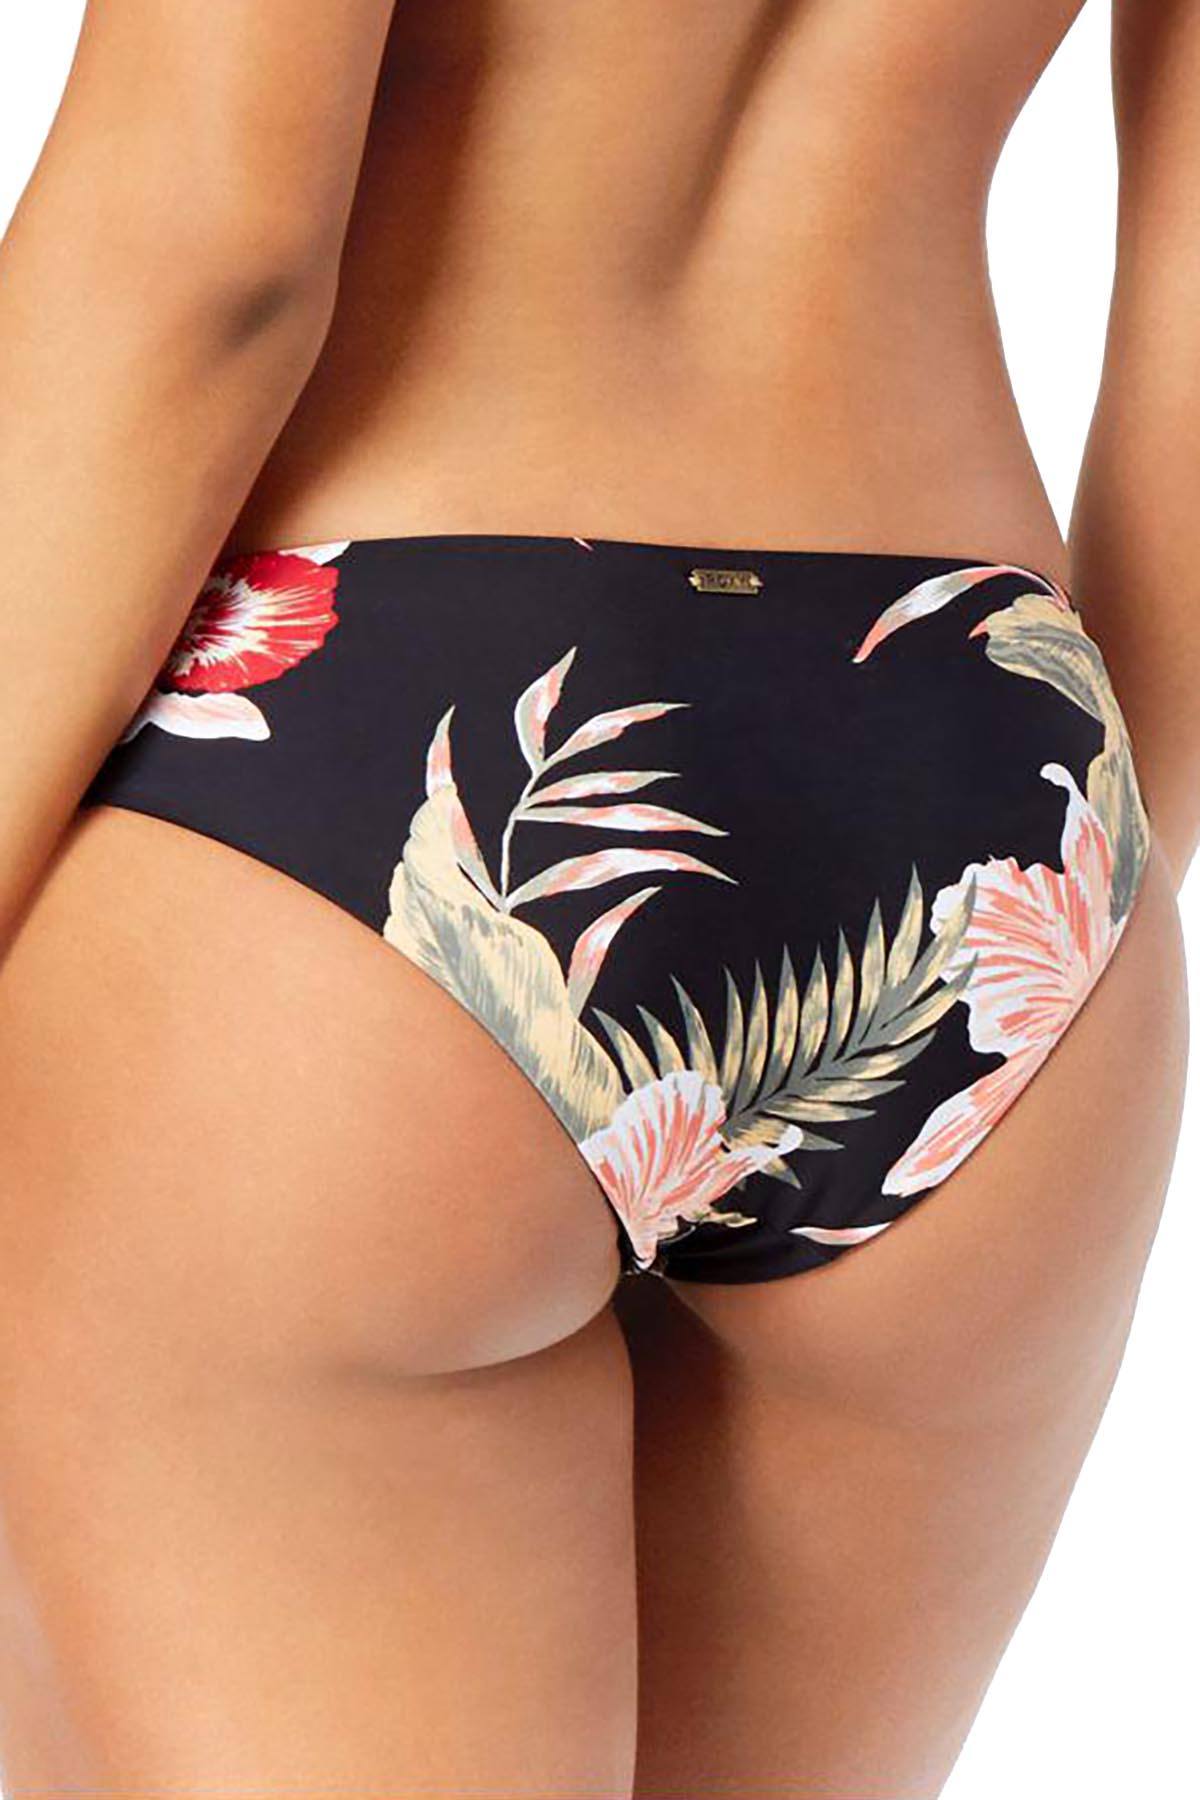 Roxy Sea Lovers Cutout Cheeky Bikini Bottom in Anthracite Black